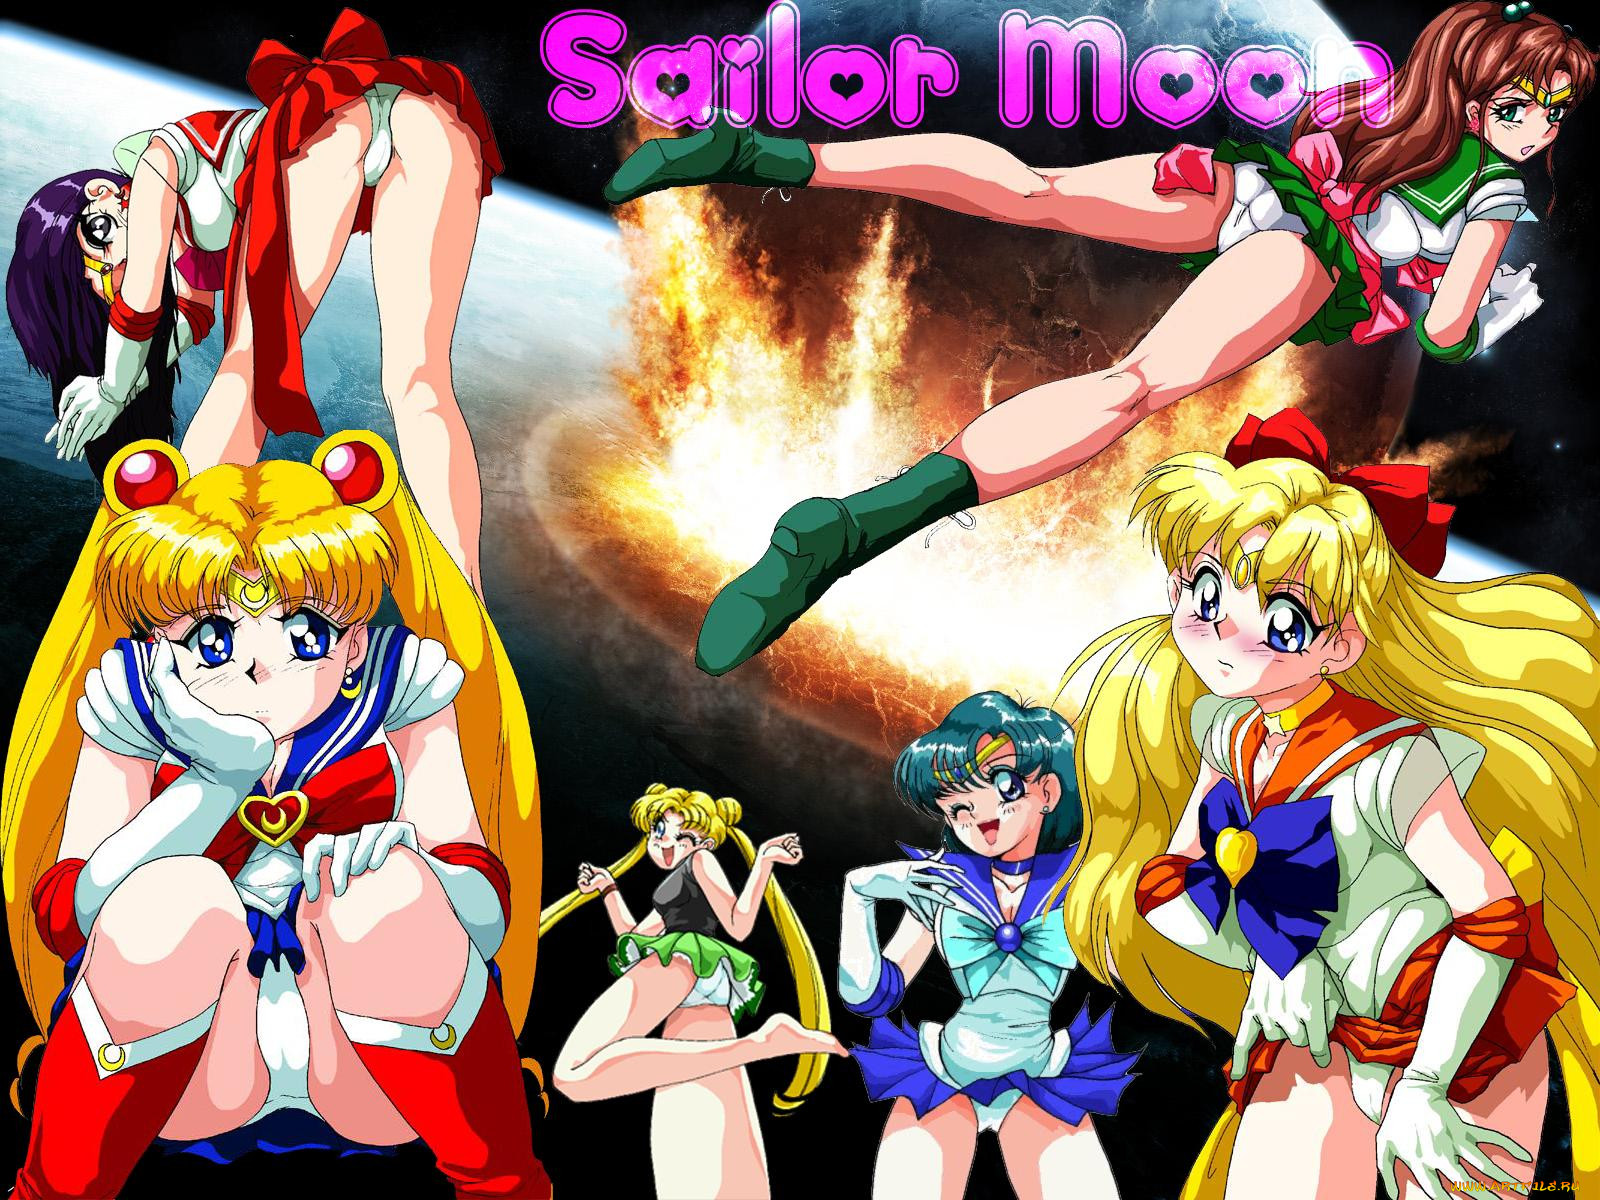 , sailor, moon